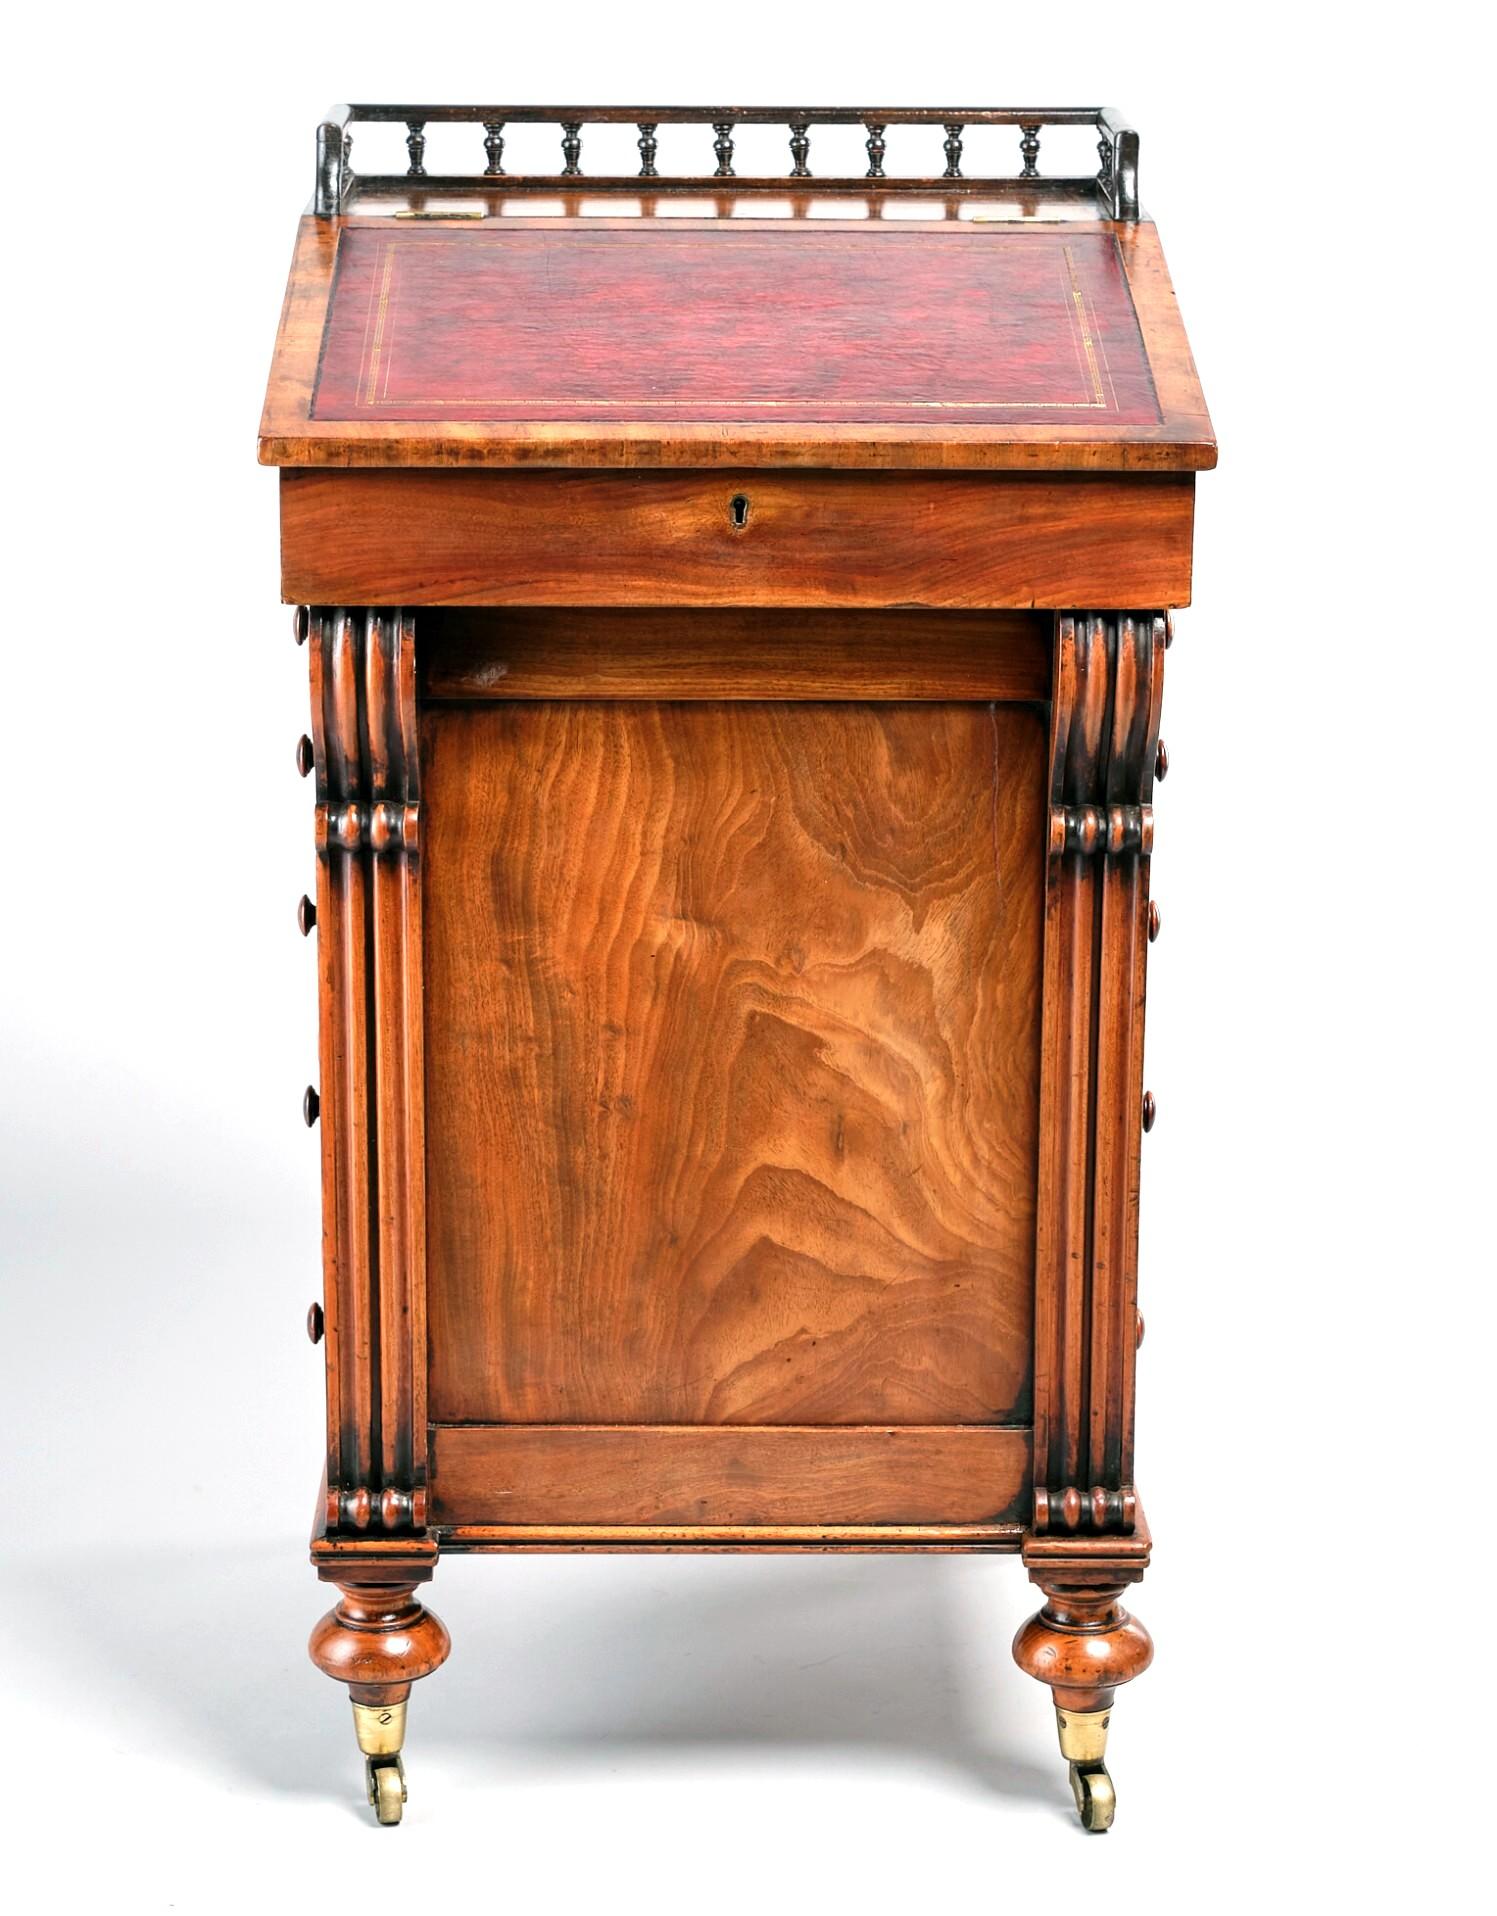 A Superior English Regency Period Davenport Desk in Figured Mahogany, Circa 1830 For Sale 11